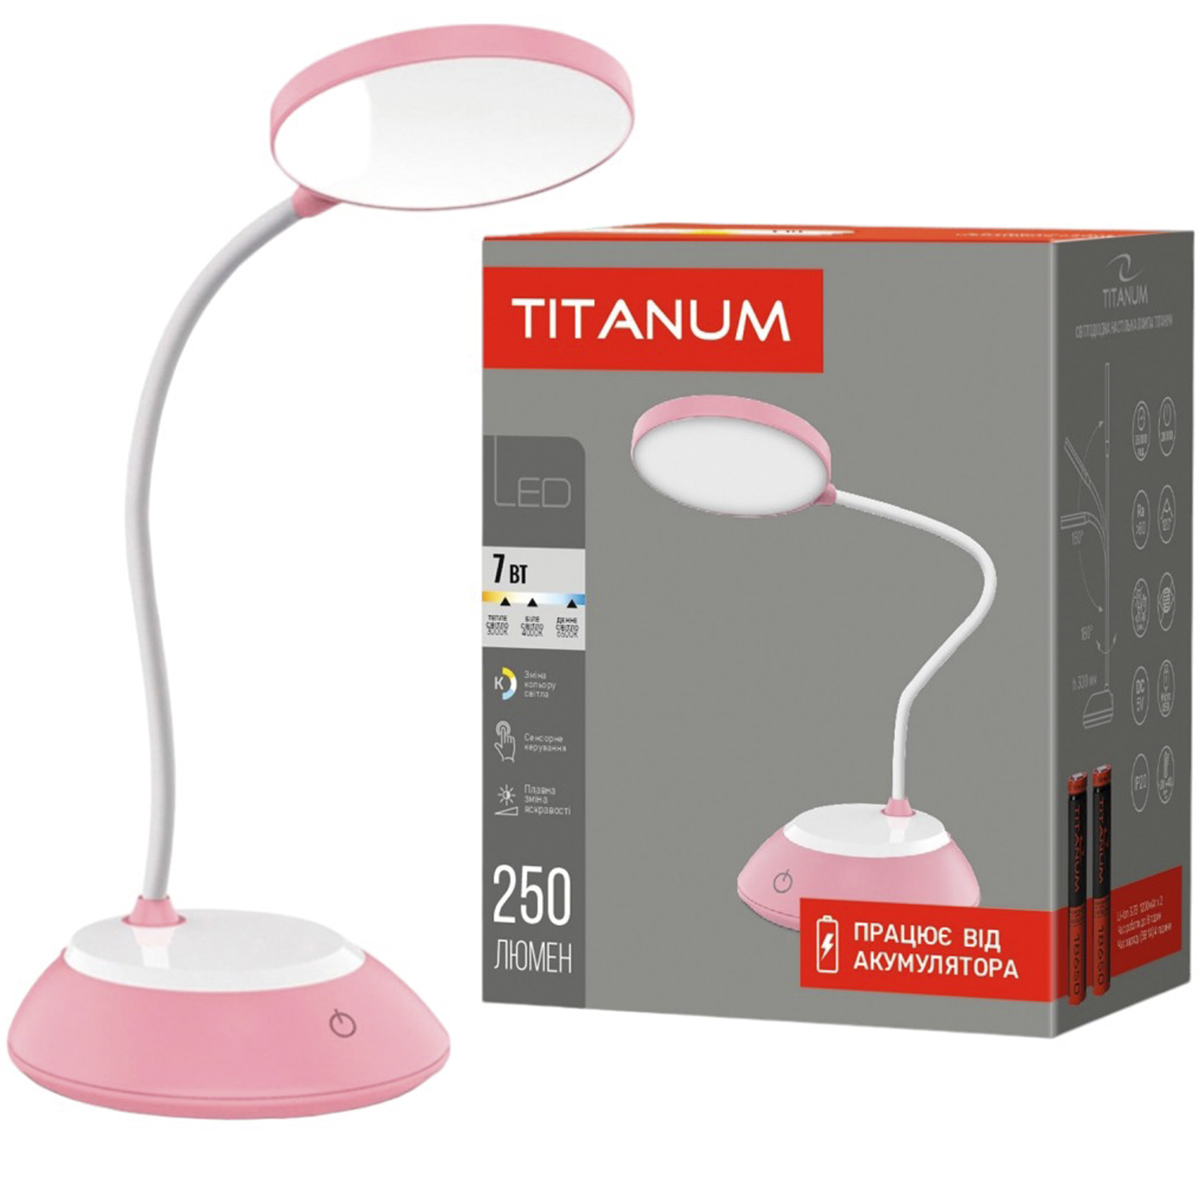 LED лампа Titanum TLTF-022P 7W 3000-6500K USB настольная с аккумулятором розовая (TLTF-022P) - фото 1